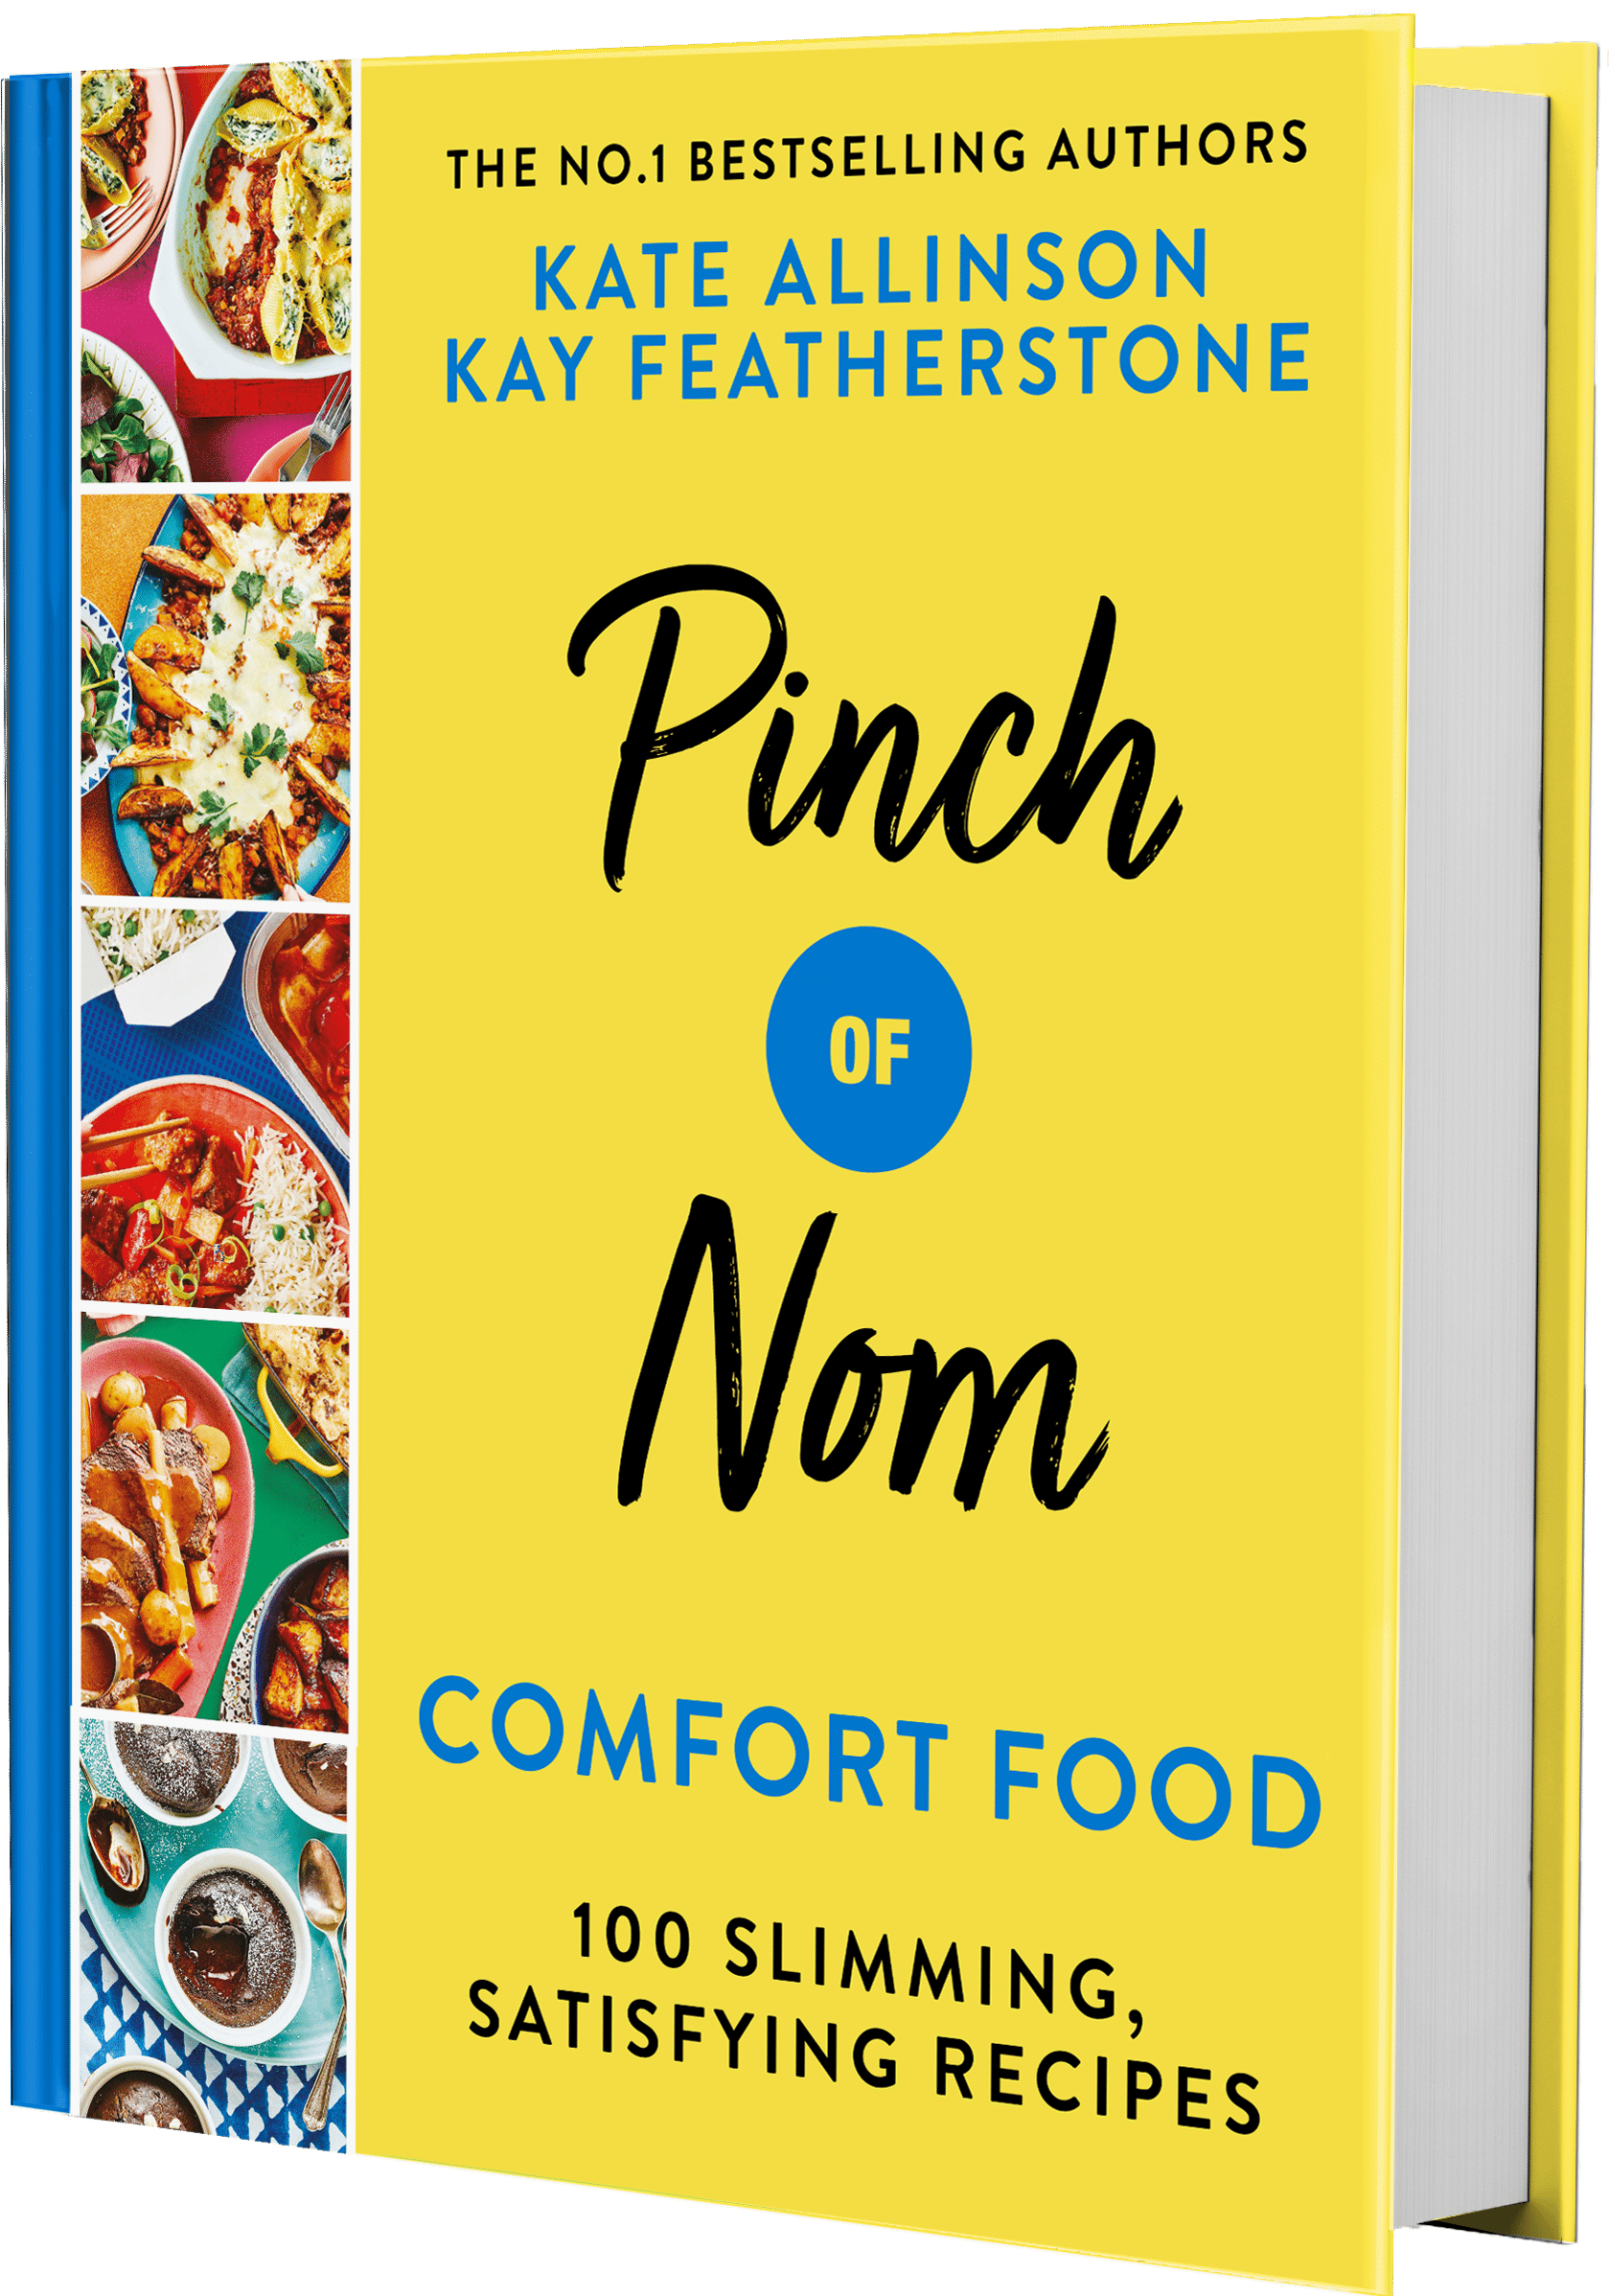 Buy our Fourth Cookbook Now! pinchofnom.com